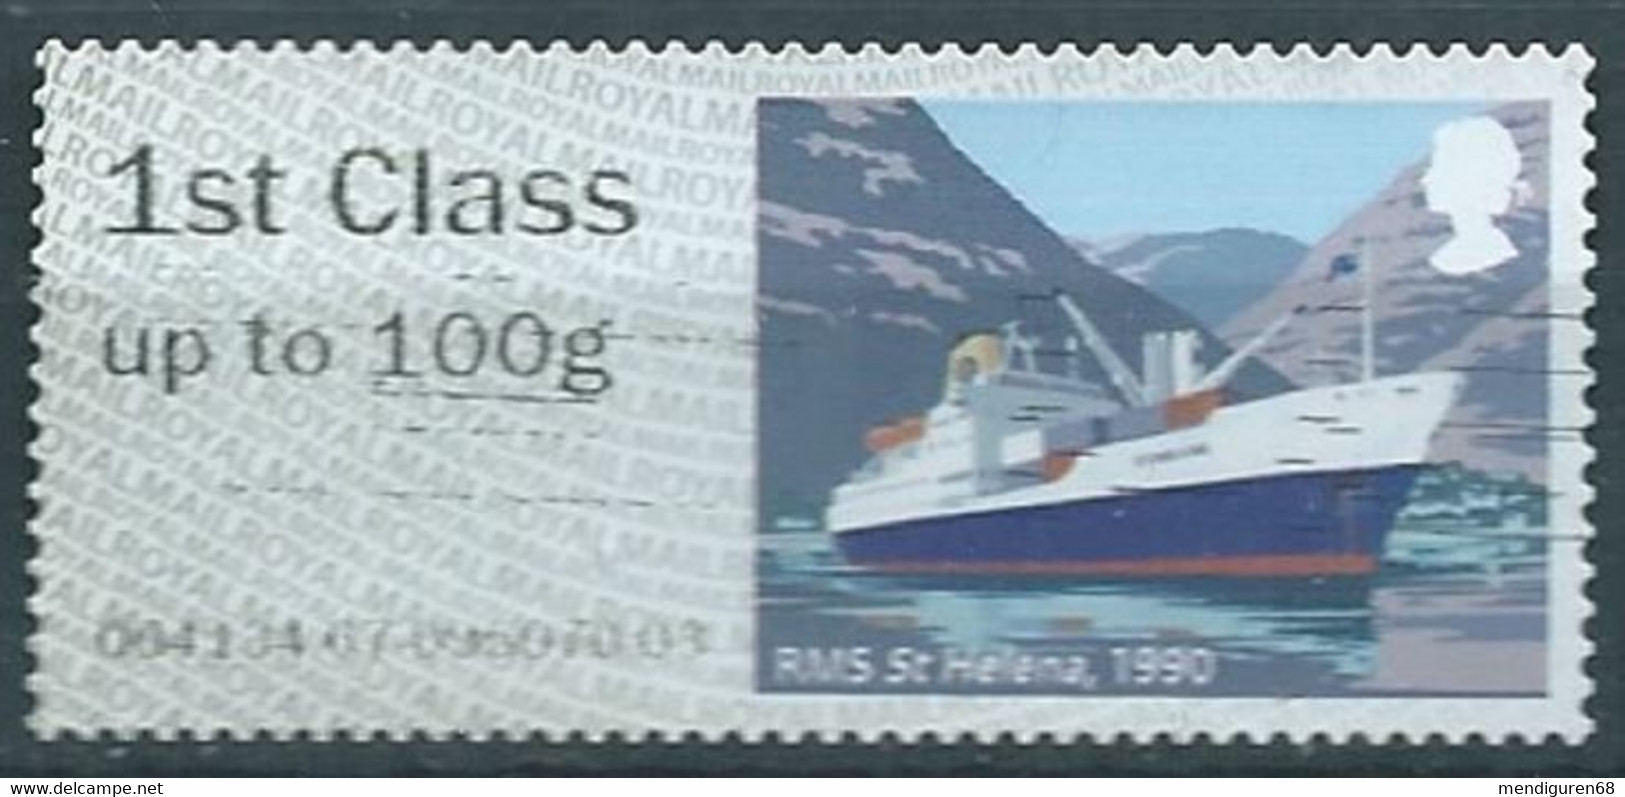 GROSBRITANNIEN GRANDE BRETAGNE GB 2018 POST&GO HERITAGE MAIL BY SEA:RMS ST HELENA FC Upto 100g SG FS212 MI AT144 YT D143 - Post & Go (distributori)